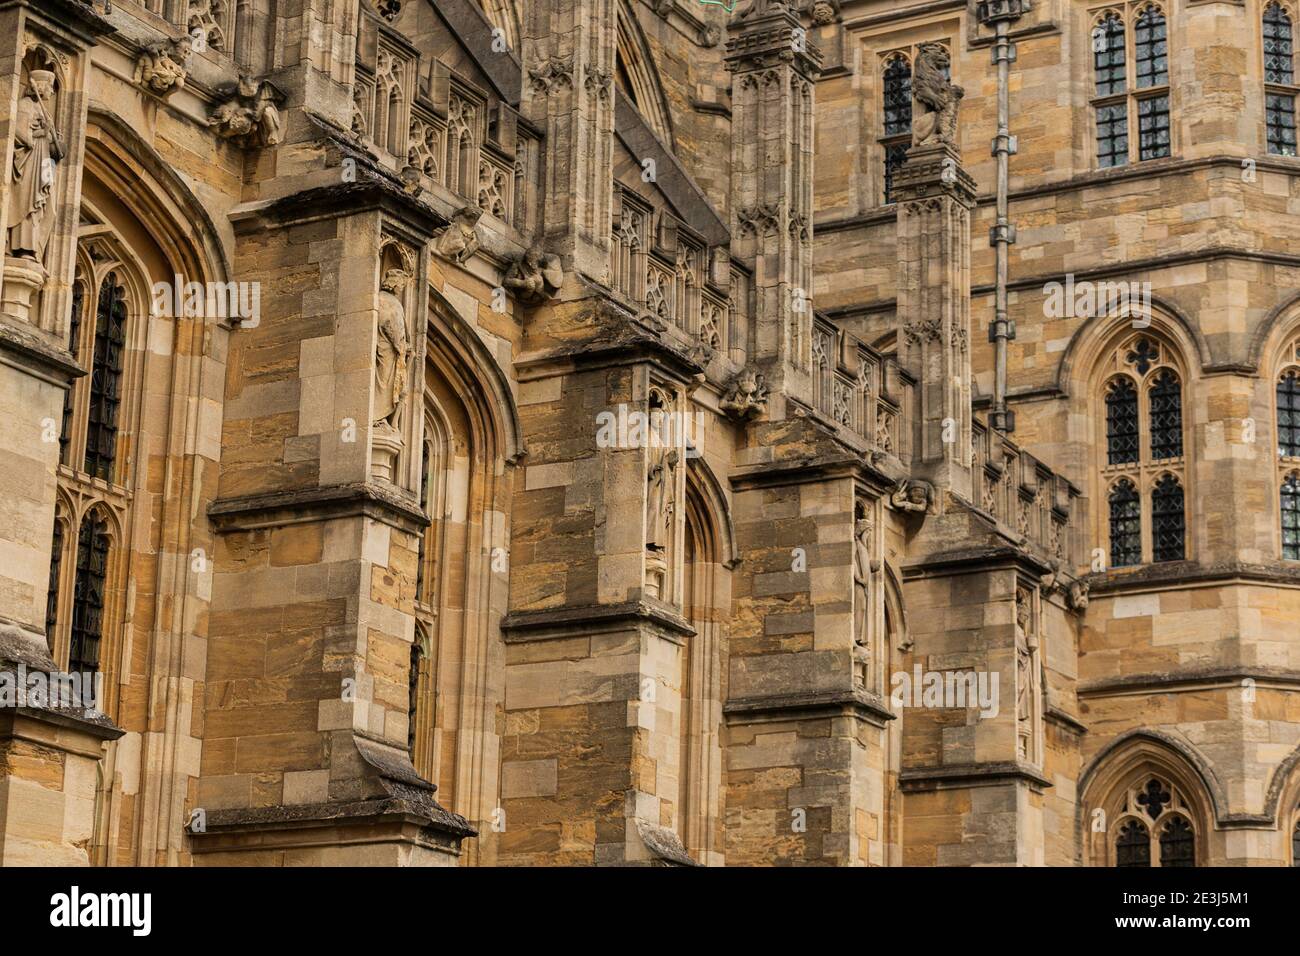 Detalle de la fachada exterior de la Capilla de San Jorge dentro del Castillo de Windsor, Berkshire, Inglaterra, Reino Unido. Foto de stock